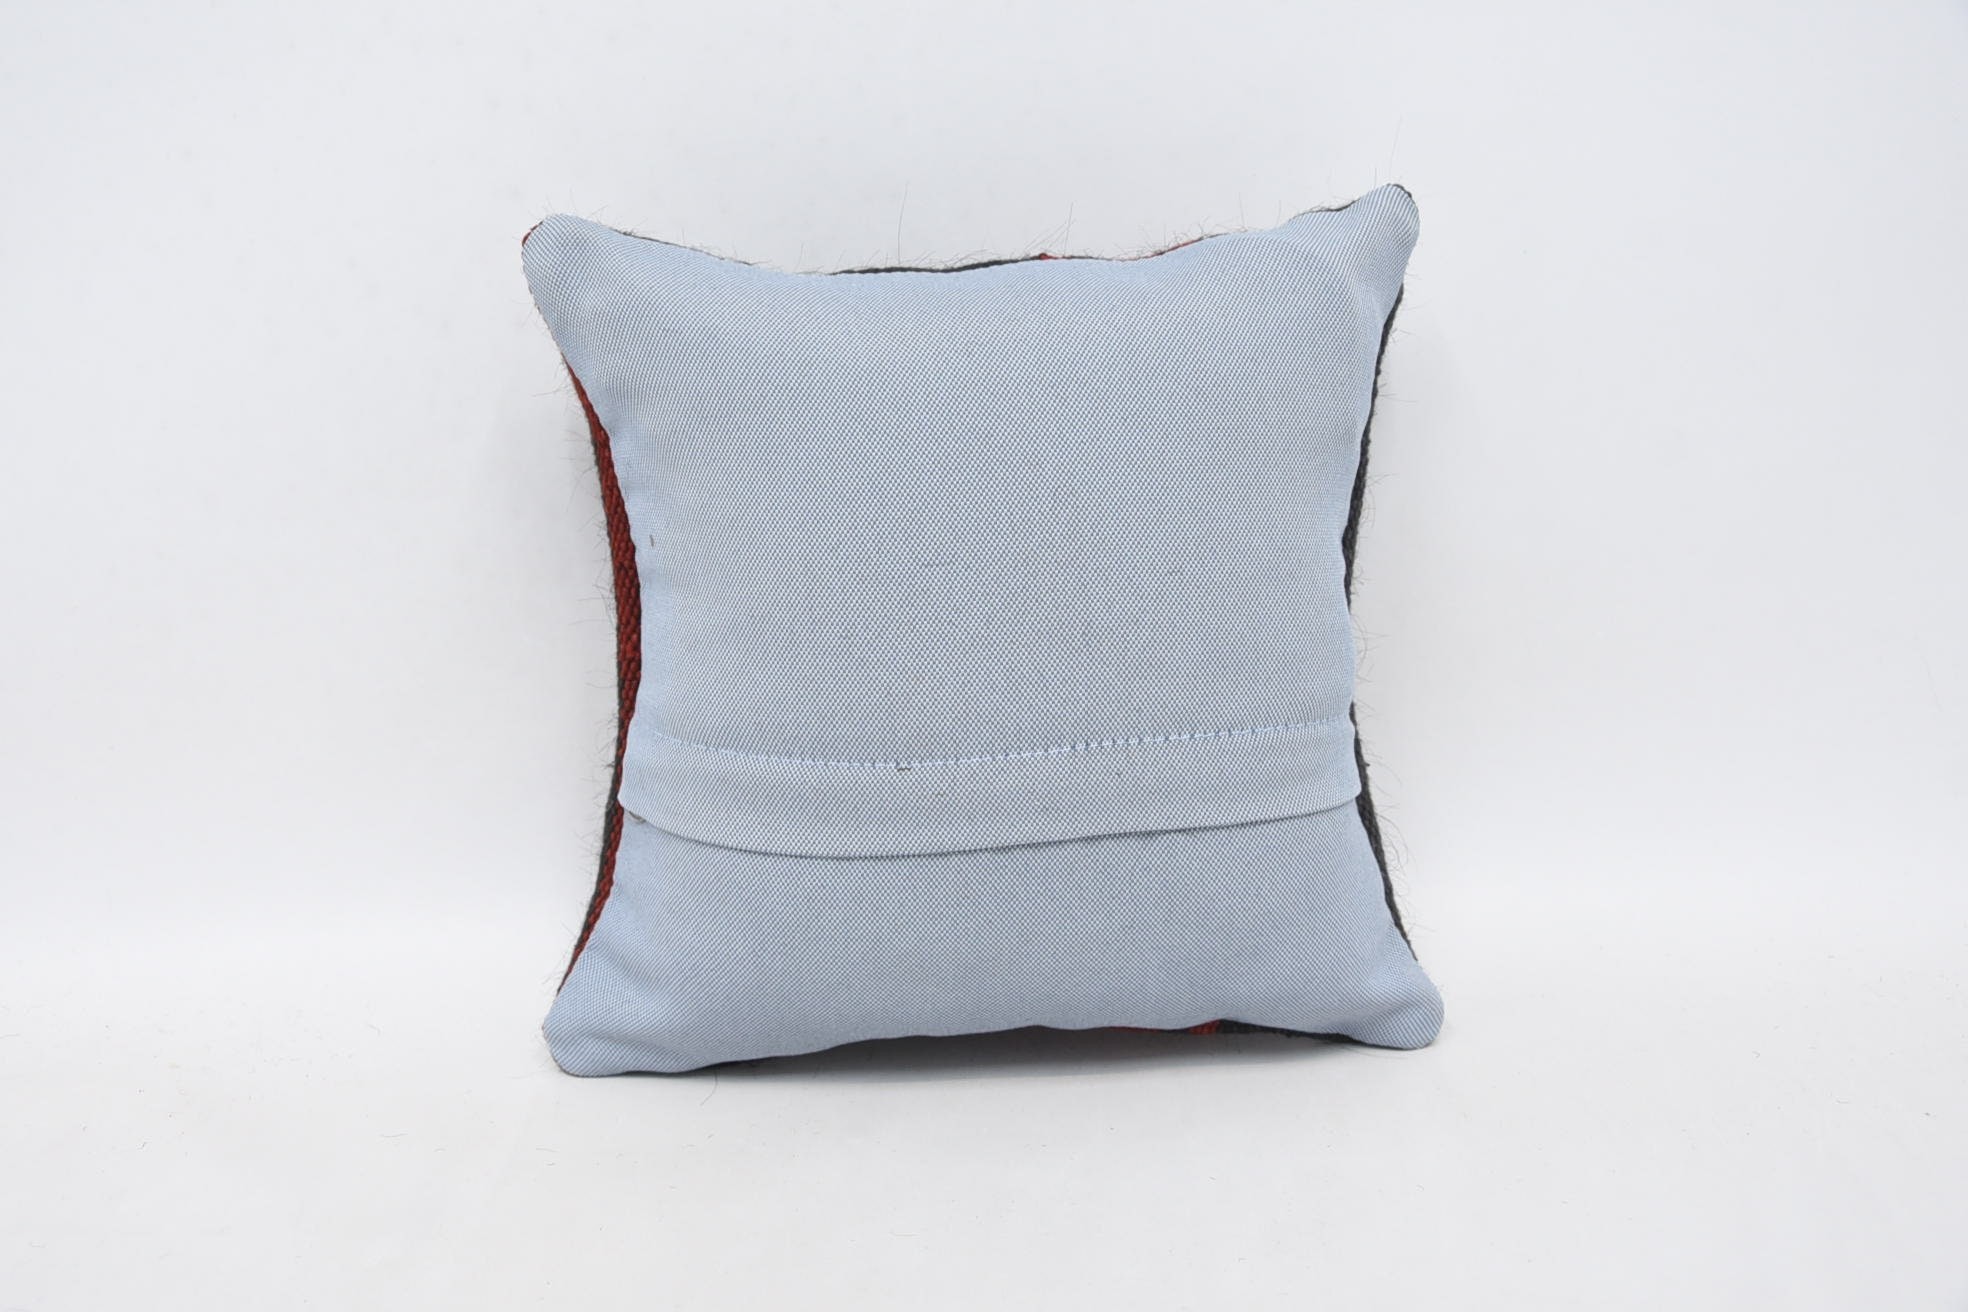 Turkish Pillow, Boho Pillow, Comfy Throw Cushion Case, Accent Pillow Cover, 12"x12" Brown Pillow Case, Boho Pillow Sham Cover